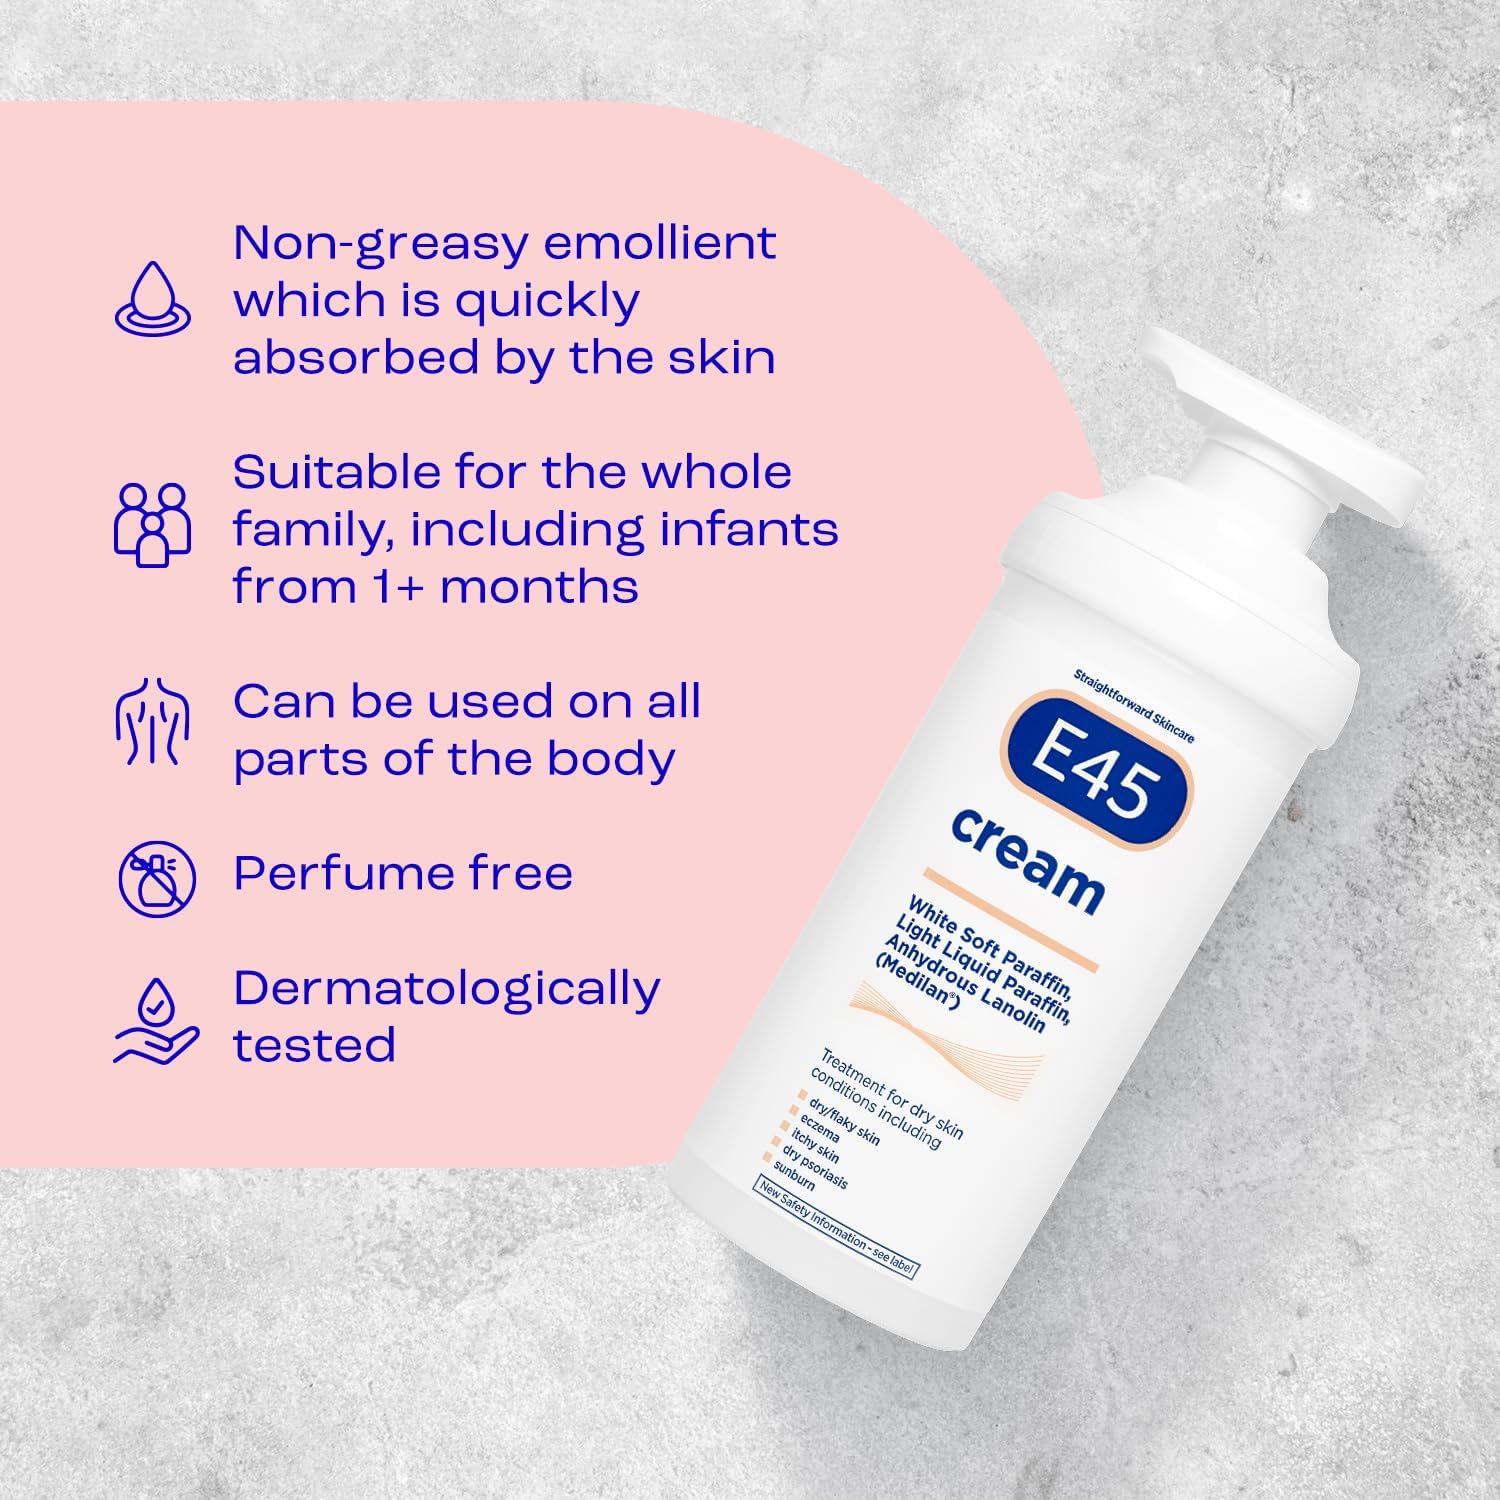 E45 Cream For Dry, Flaky Skin, Suitable for Eczema, Itchy Skin, Dry Psoriasis, Sunburn, 500g Moisturiser Pump : Amazon.co.uk: Beauty